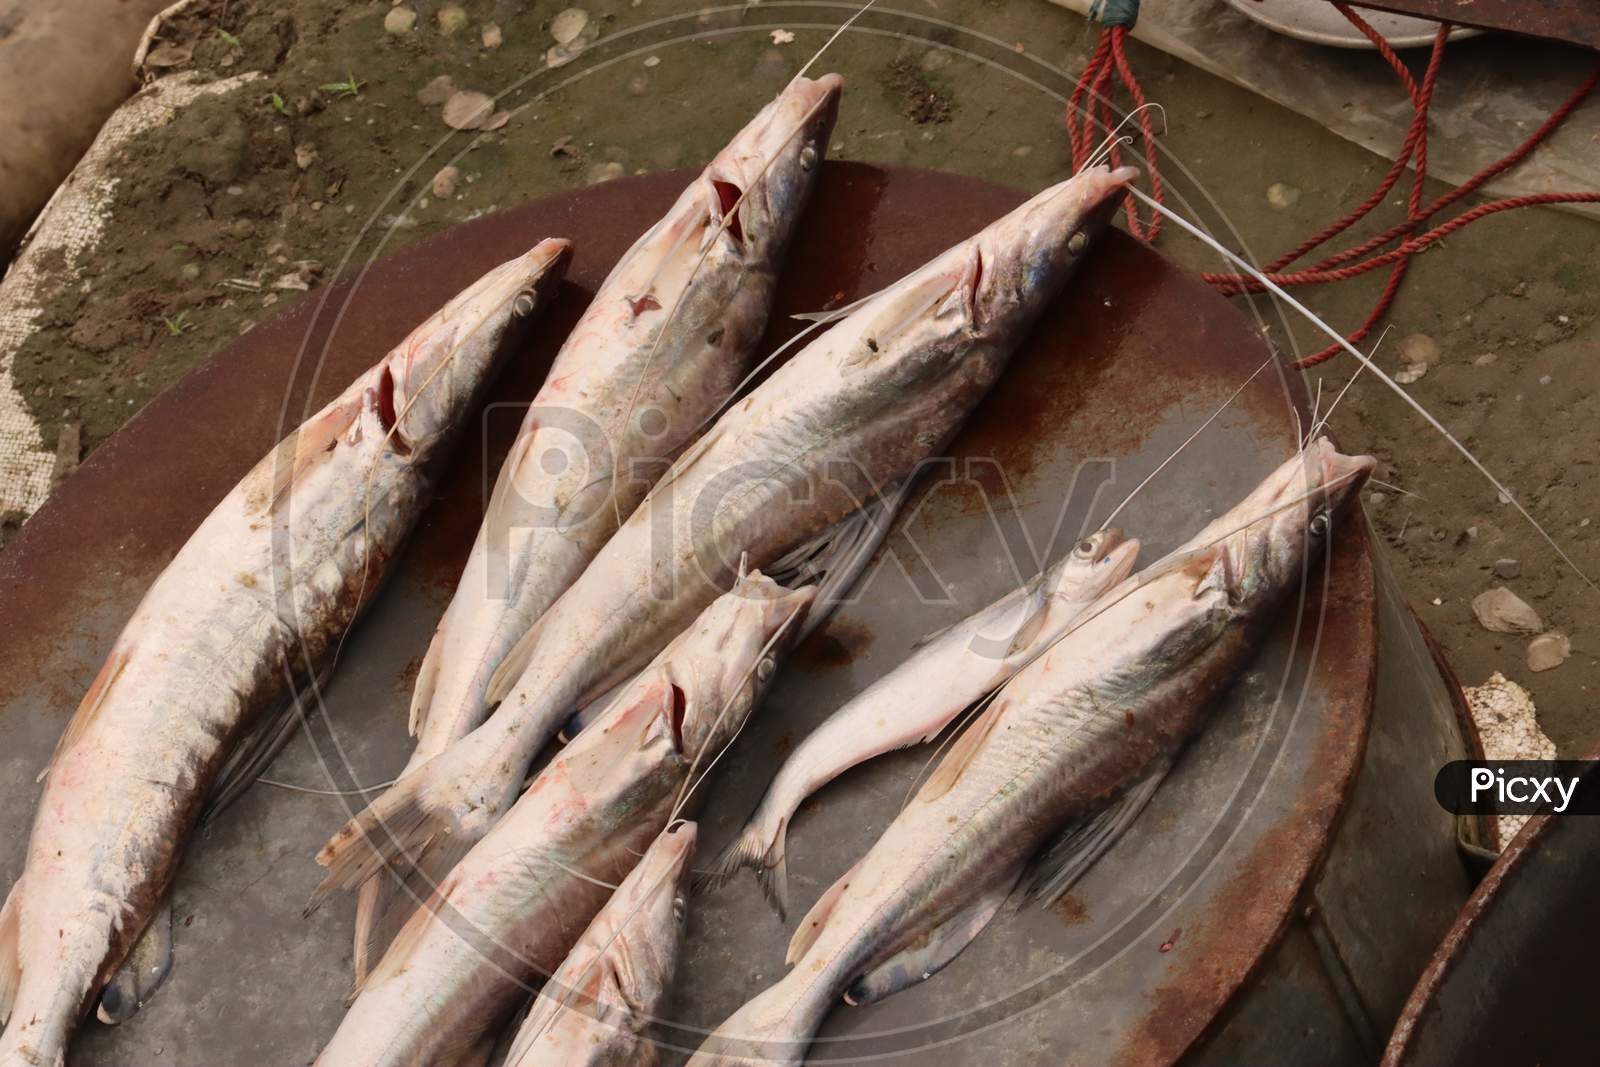 Indian River Fish, stock image